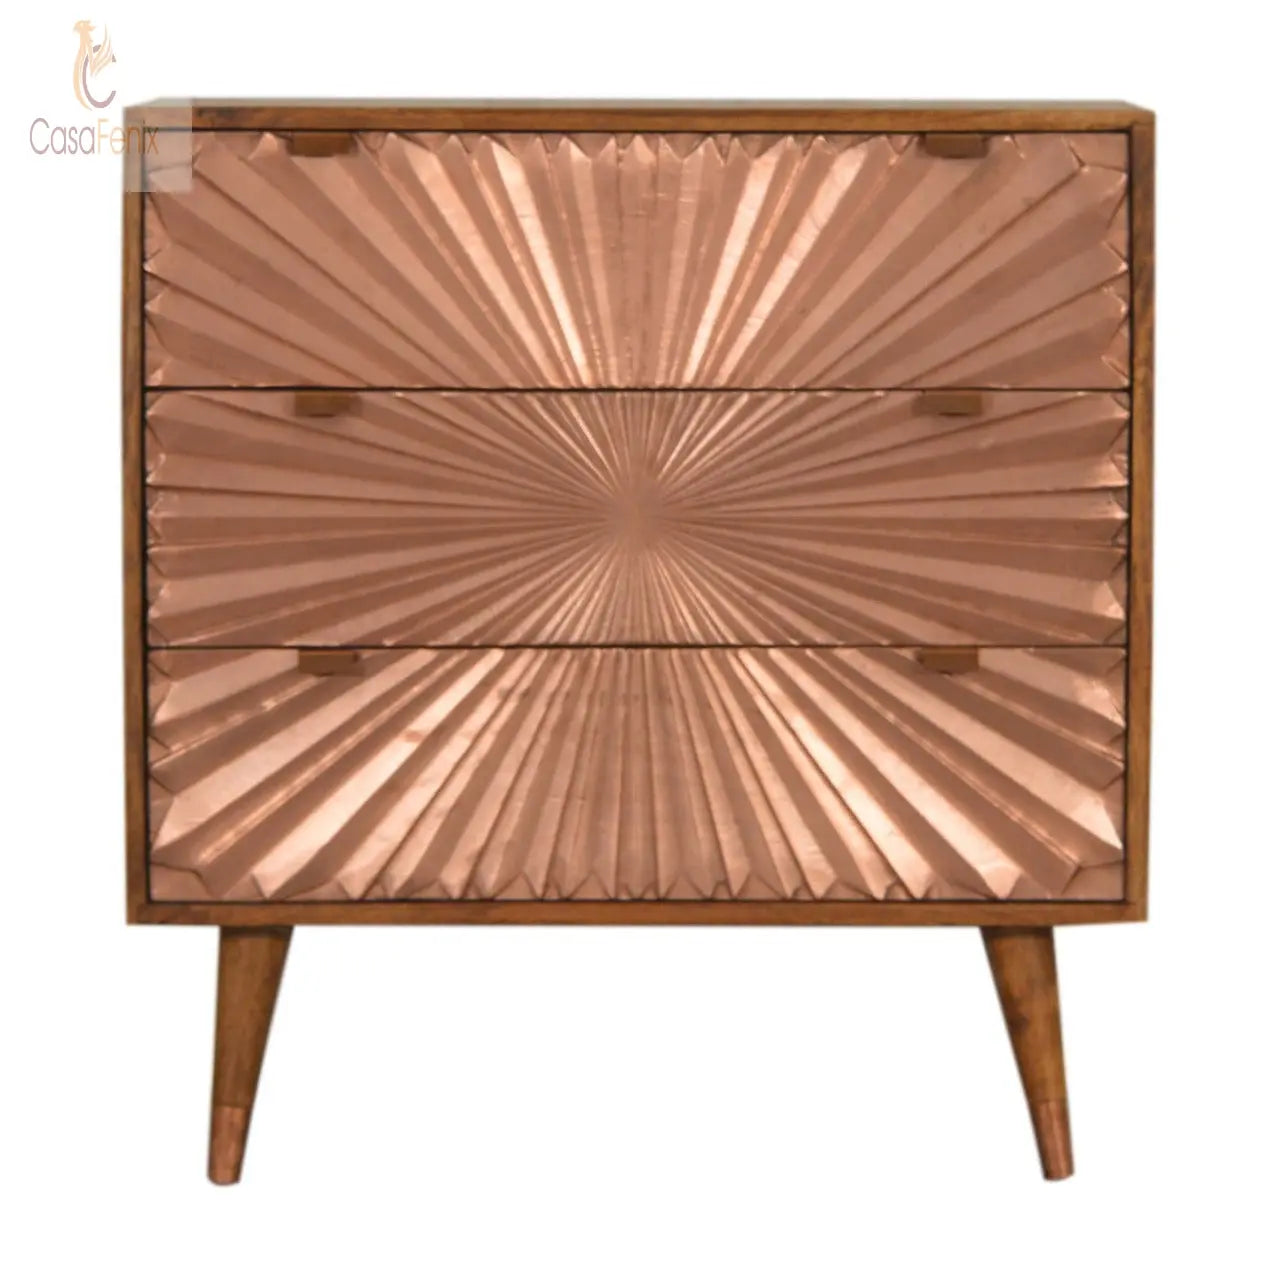 Manila Copper Chest 3 Metal Fronted Doors Chestnut Finish Nordic Design - CasaFenix